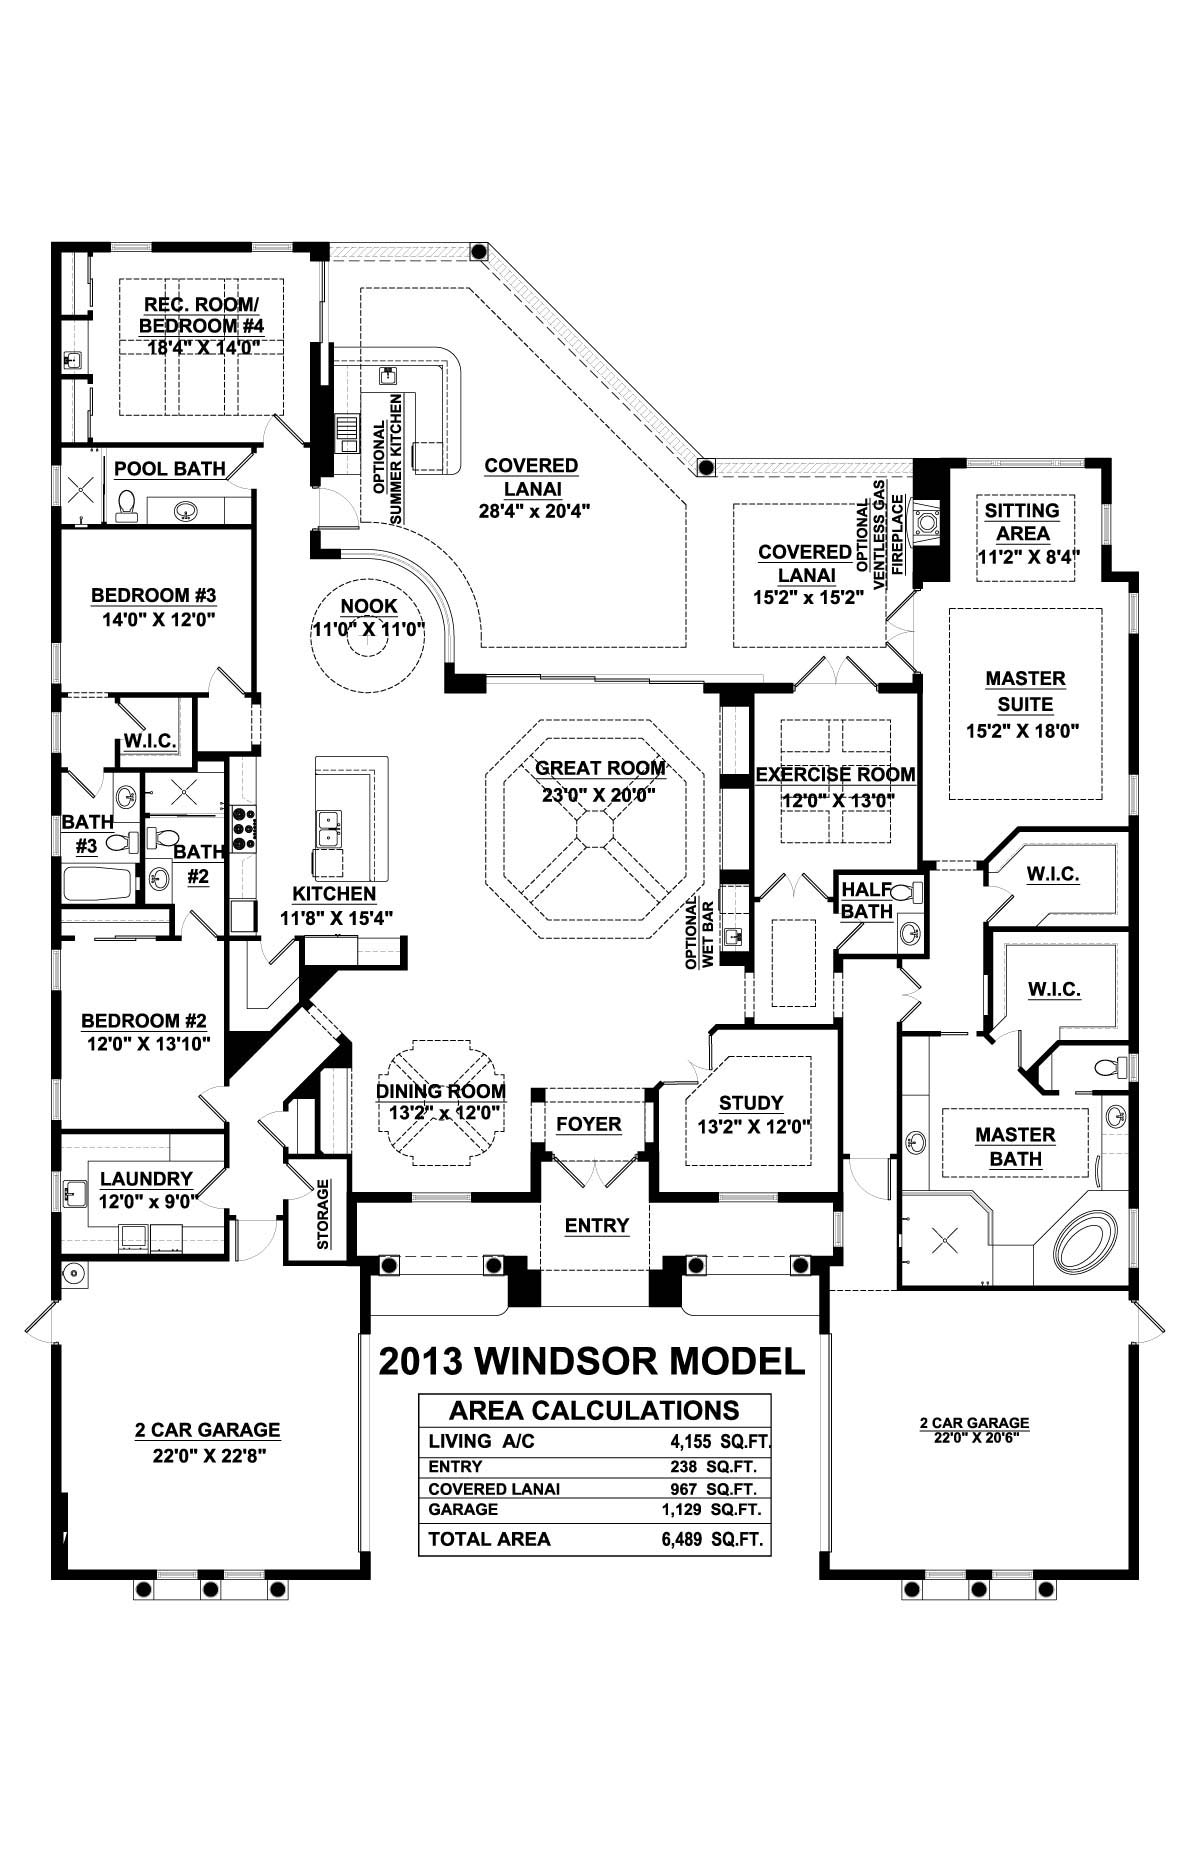 Windsor Floor Plan in Isla Del Sol at Fiddlers Creek, Naples, Stock Construction, 4 bedroom, 4 1/2 bath, great room, exercise room, study, dining room, dinette, Split 4-car garage